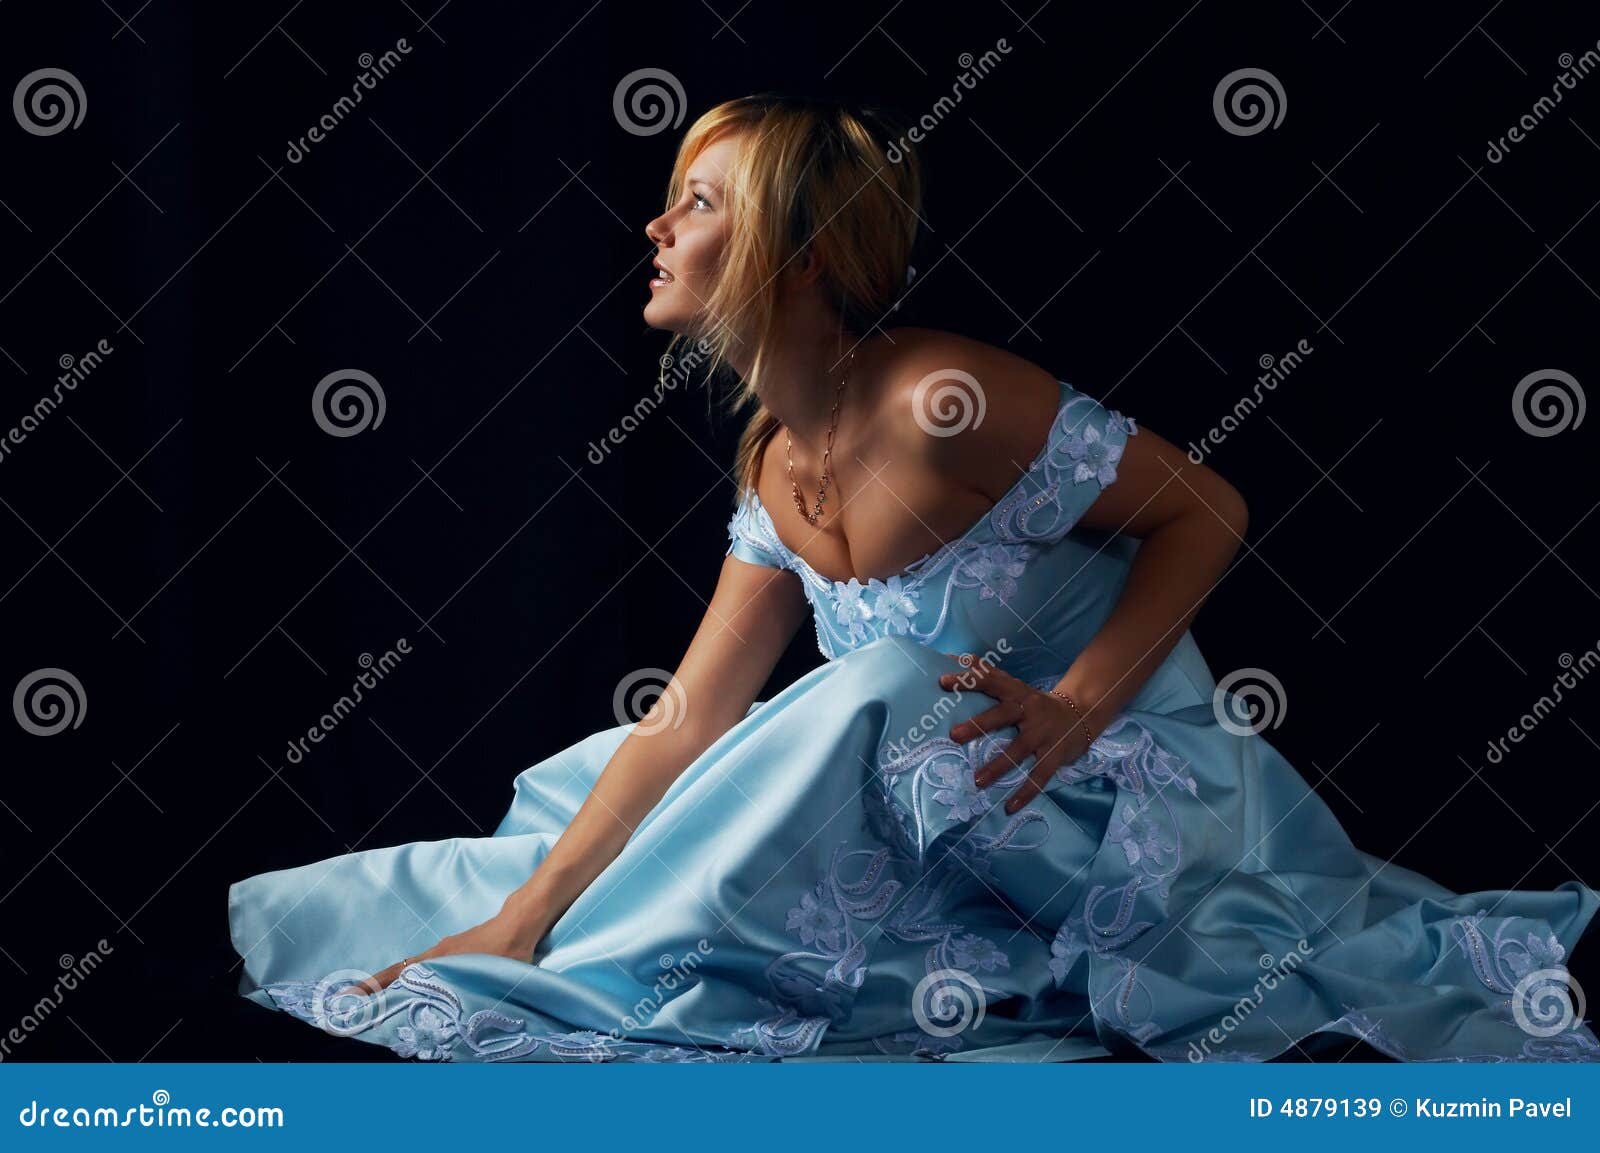 sensual fiancee in blue dress